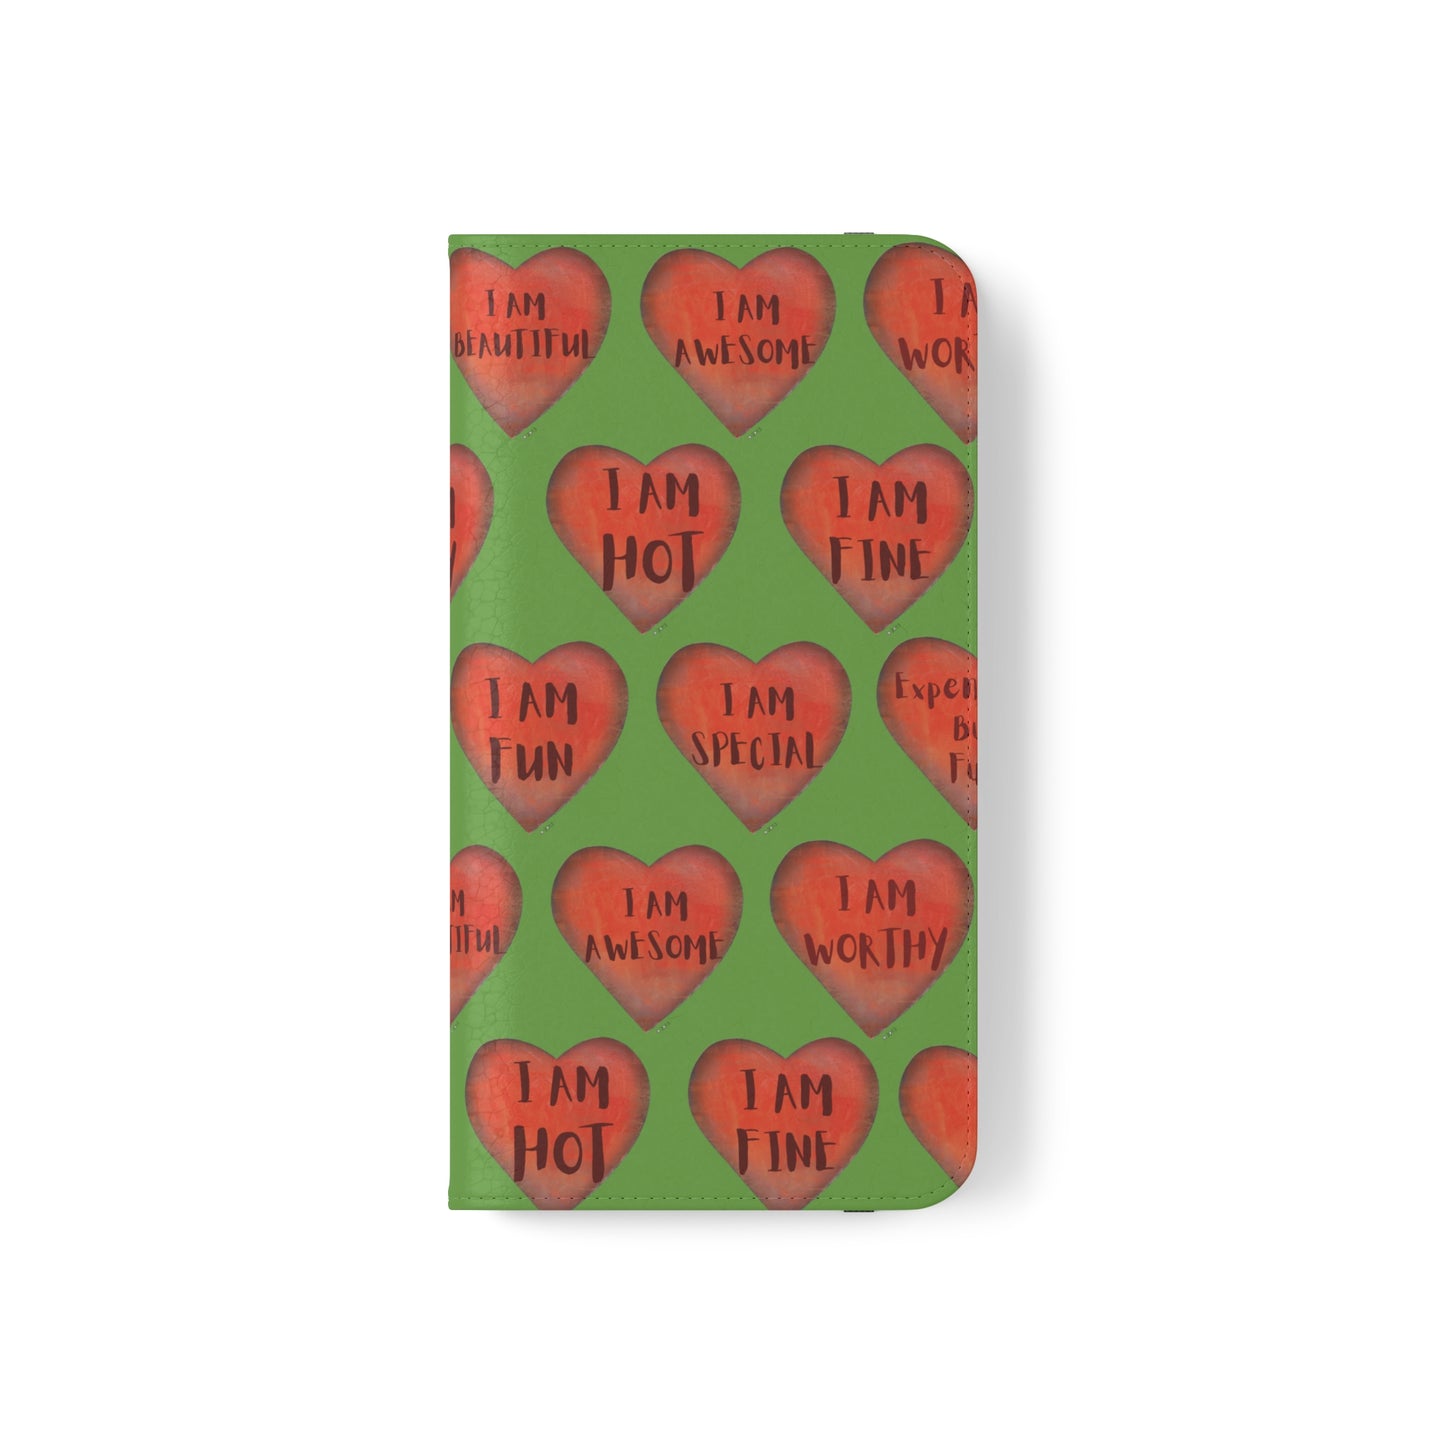 Phone Flip Cases - Wallet Phone case - flip phone case - Heart Phone case - Valentine Gift - iphone wallet - Samsung Wallet